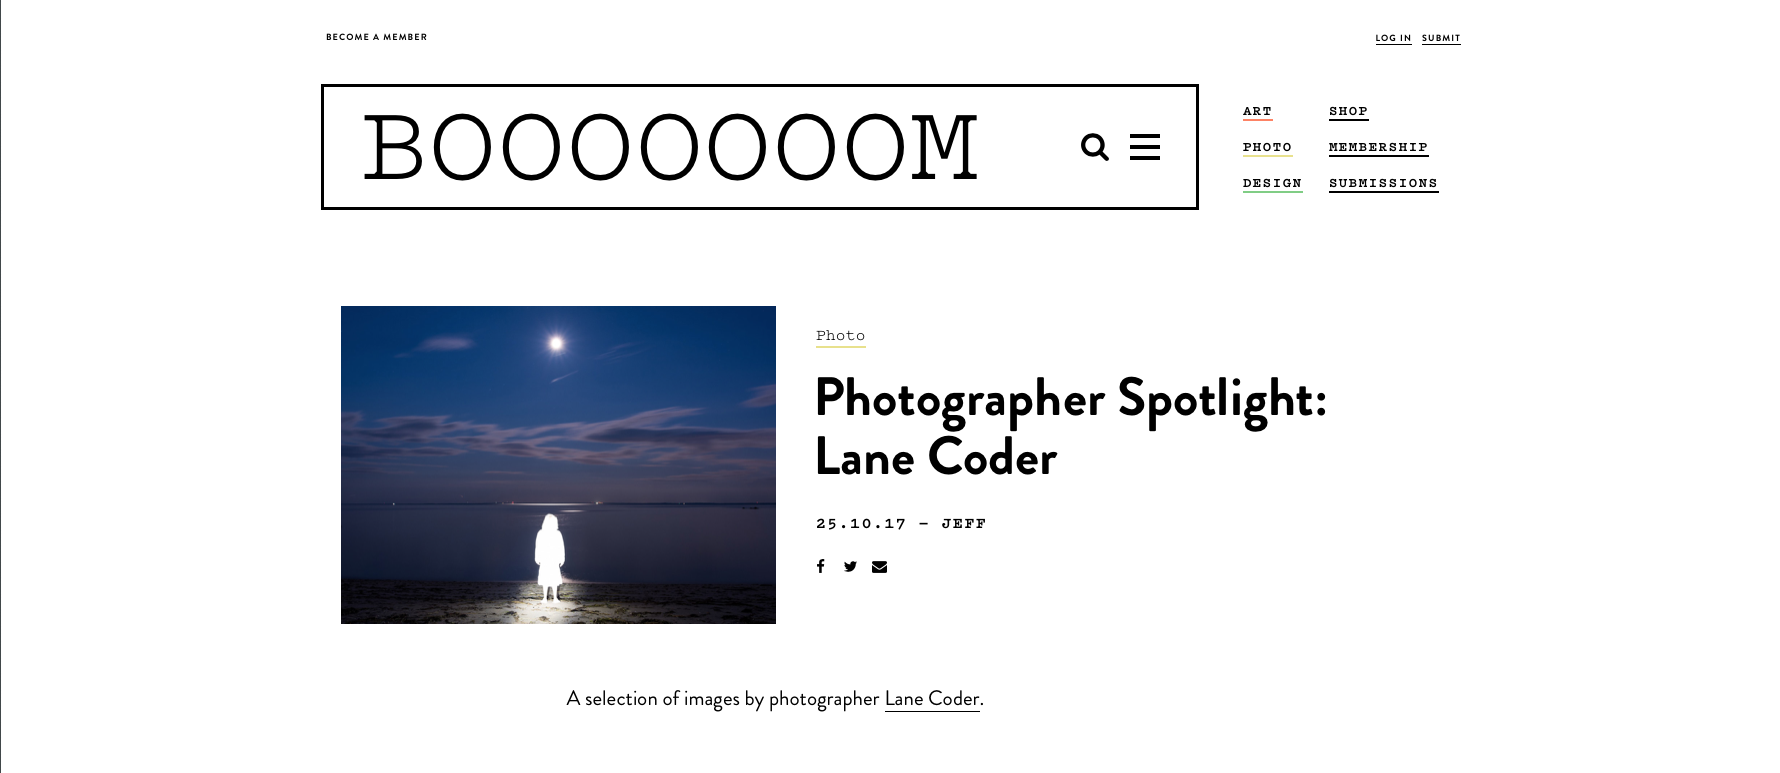 BOOOOOOOM - "Photographer Spotlight"